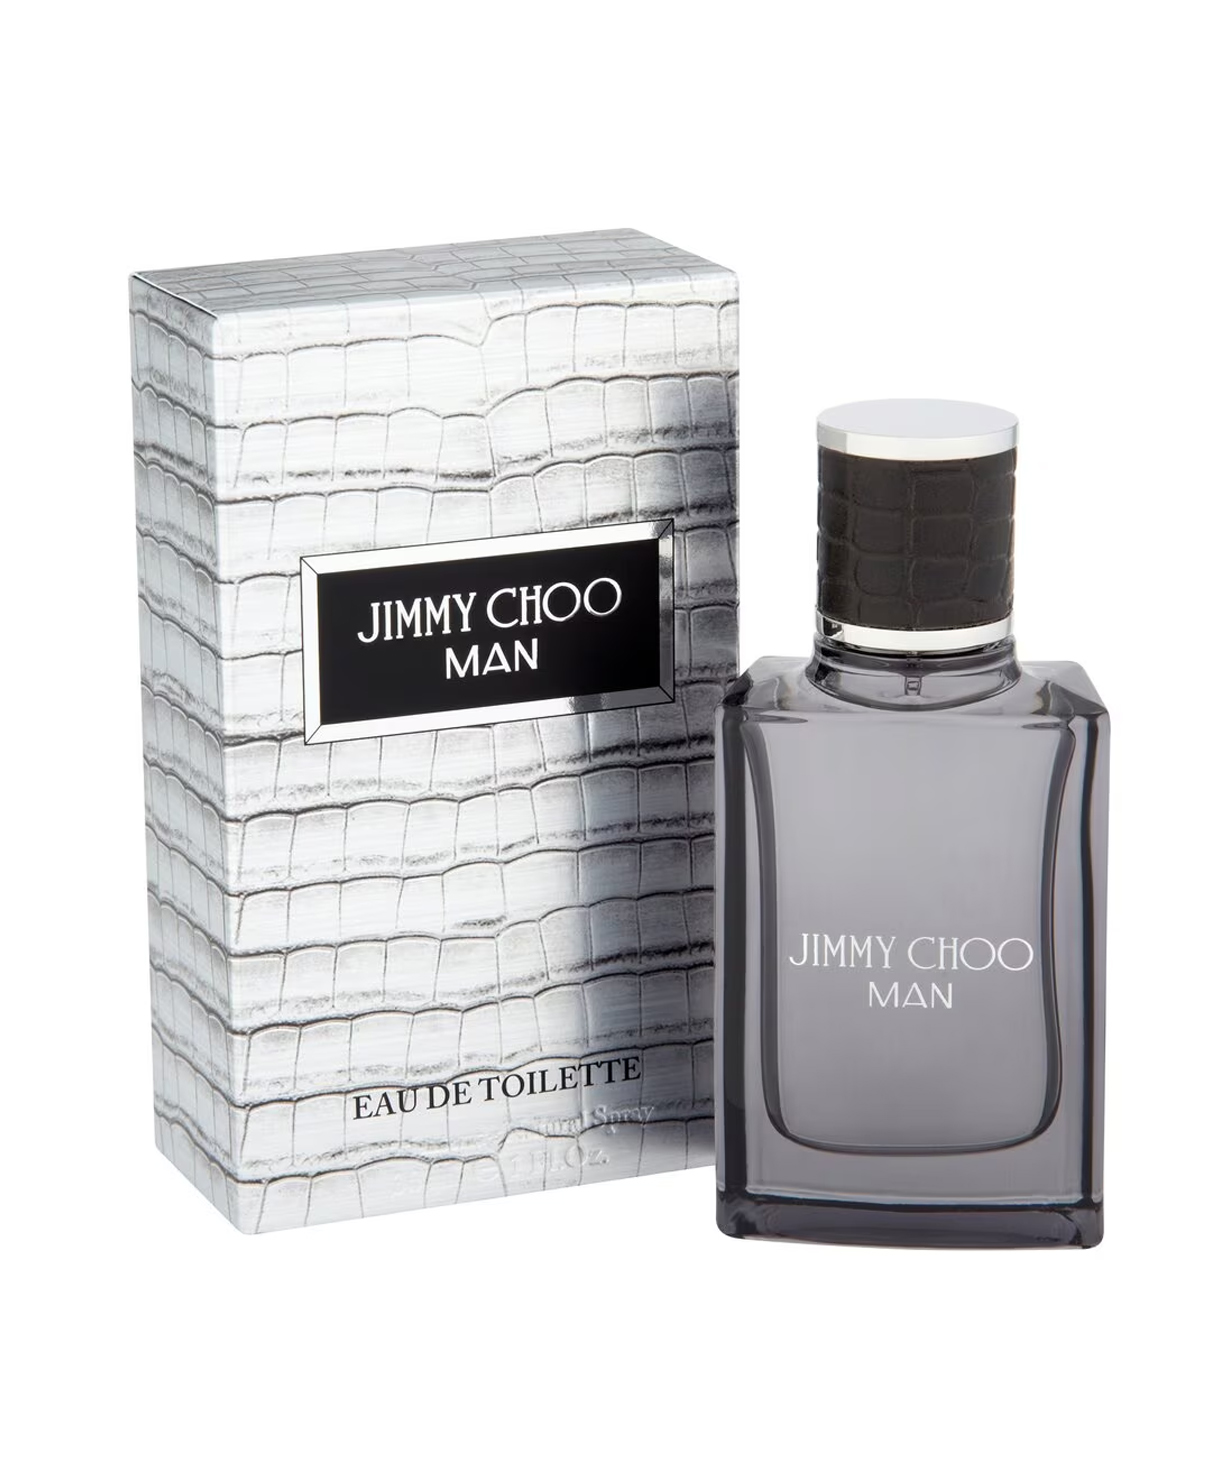 Perfume «Jimmy Choo» for men, 30 ml